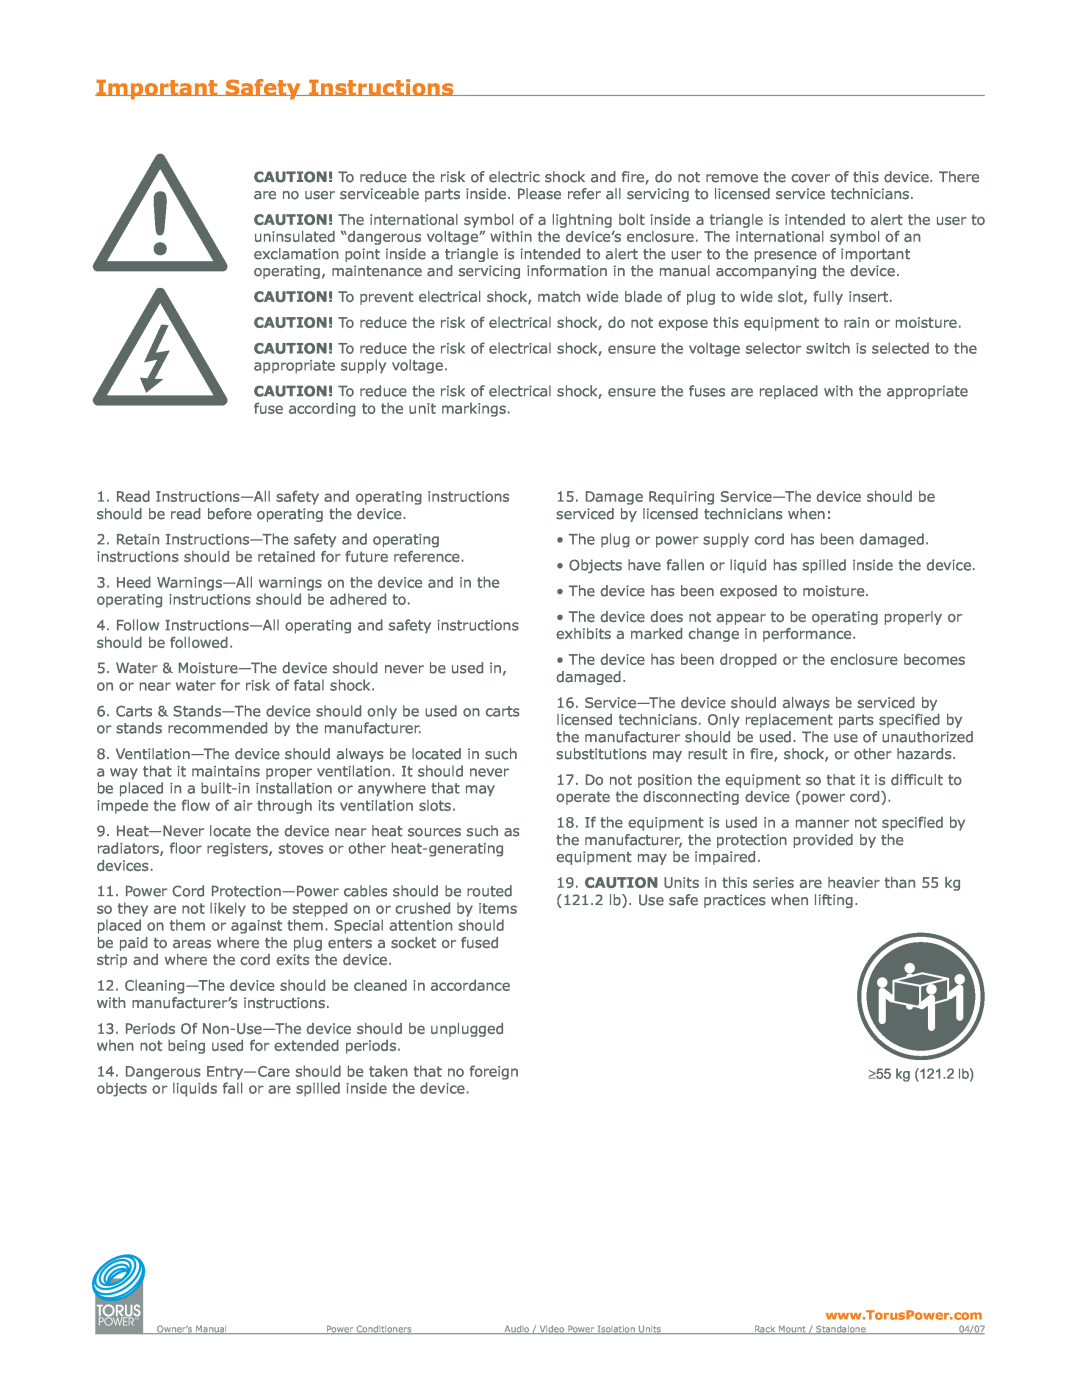 Torus Power A120-HFB-A5AB manual Important Safety Instructions, 55 kg 121.2 lb 